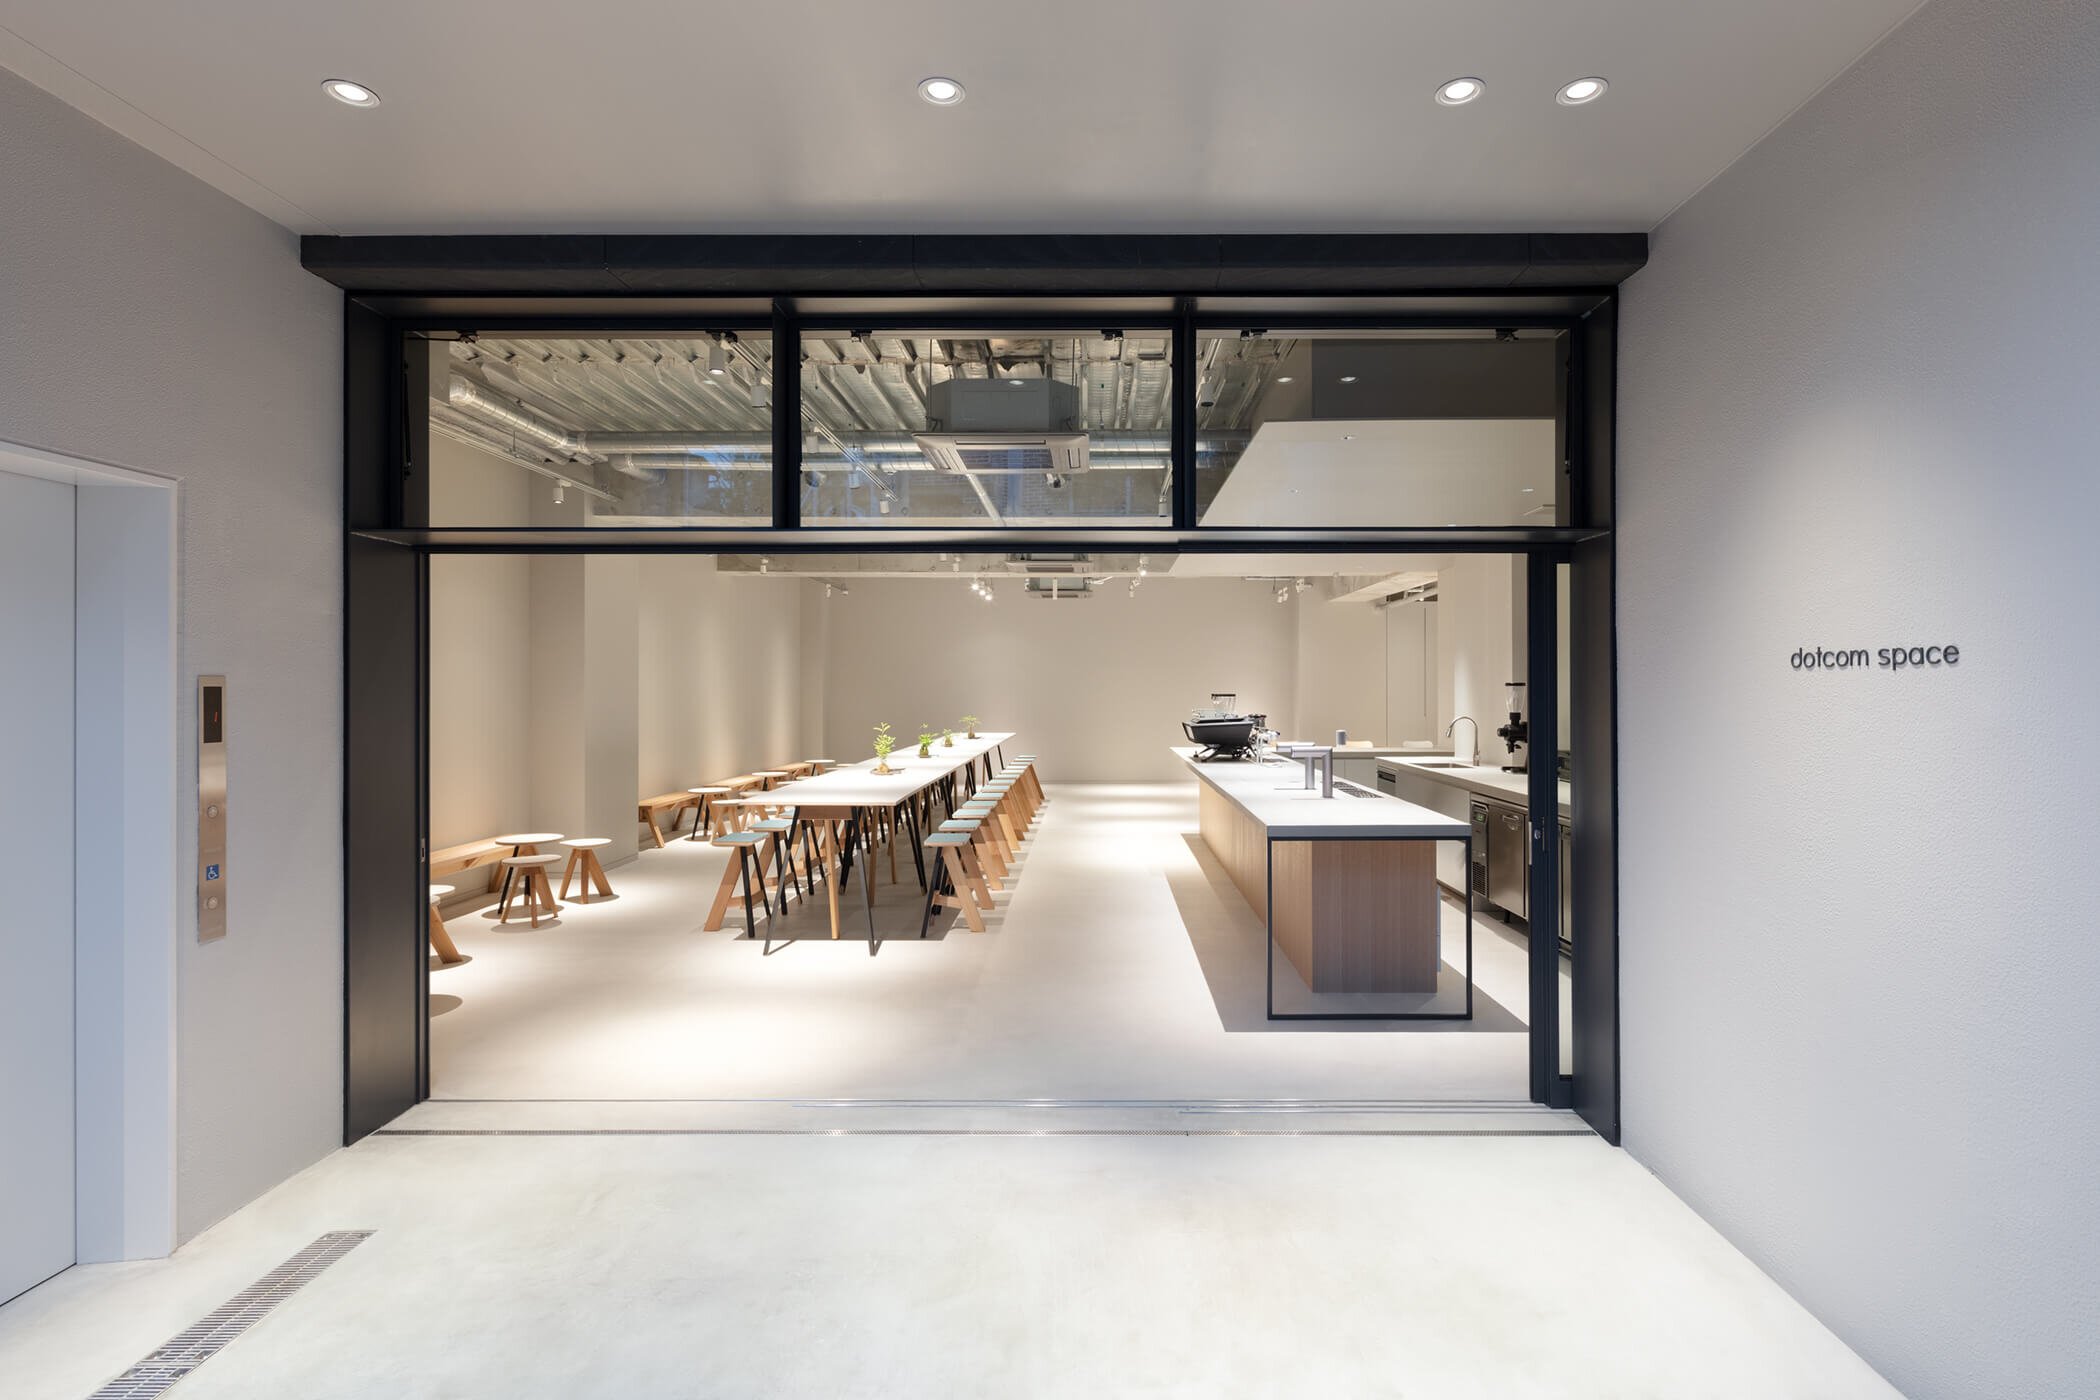 keiji-ashizawa-design-dotcom-space-tokyo-japan-cafe-interior-design-idreit-126.jpg